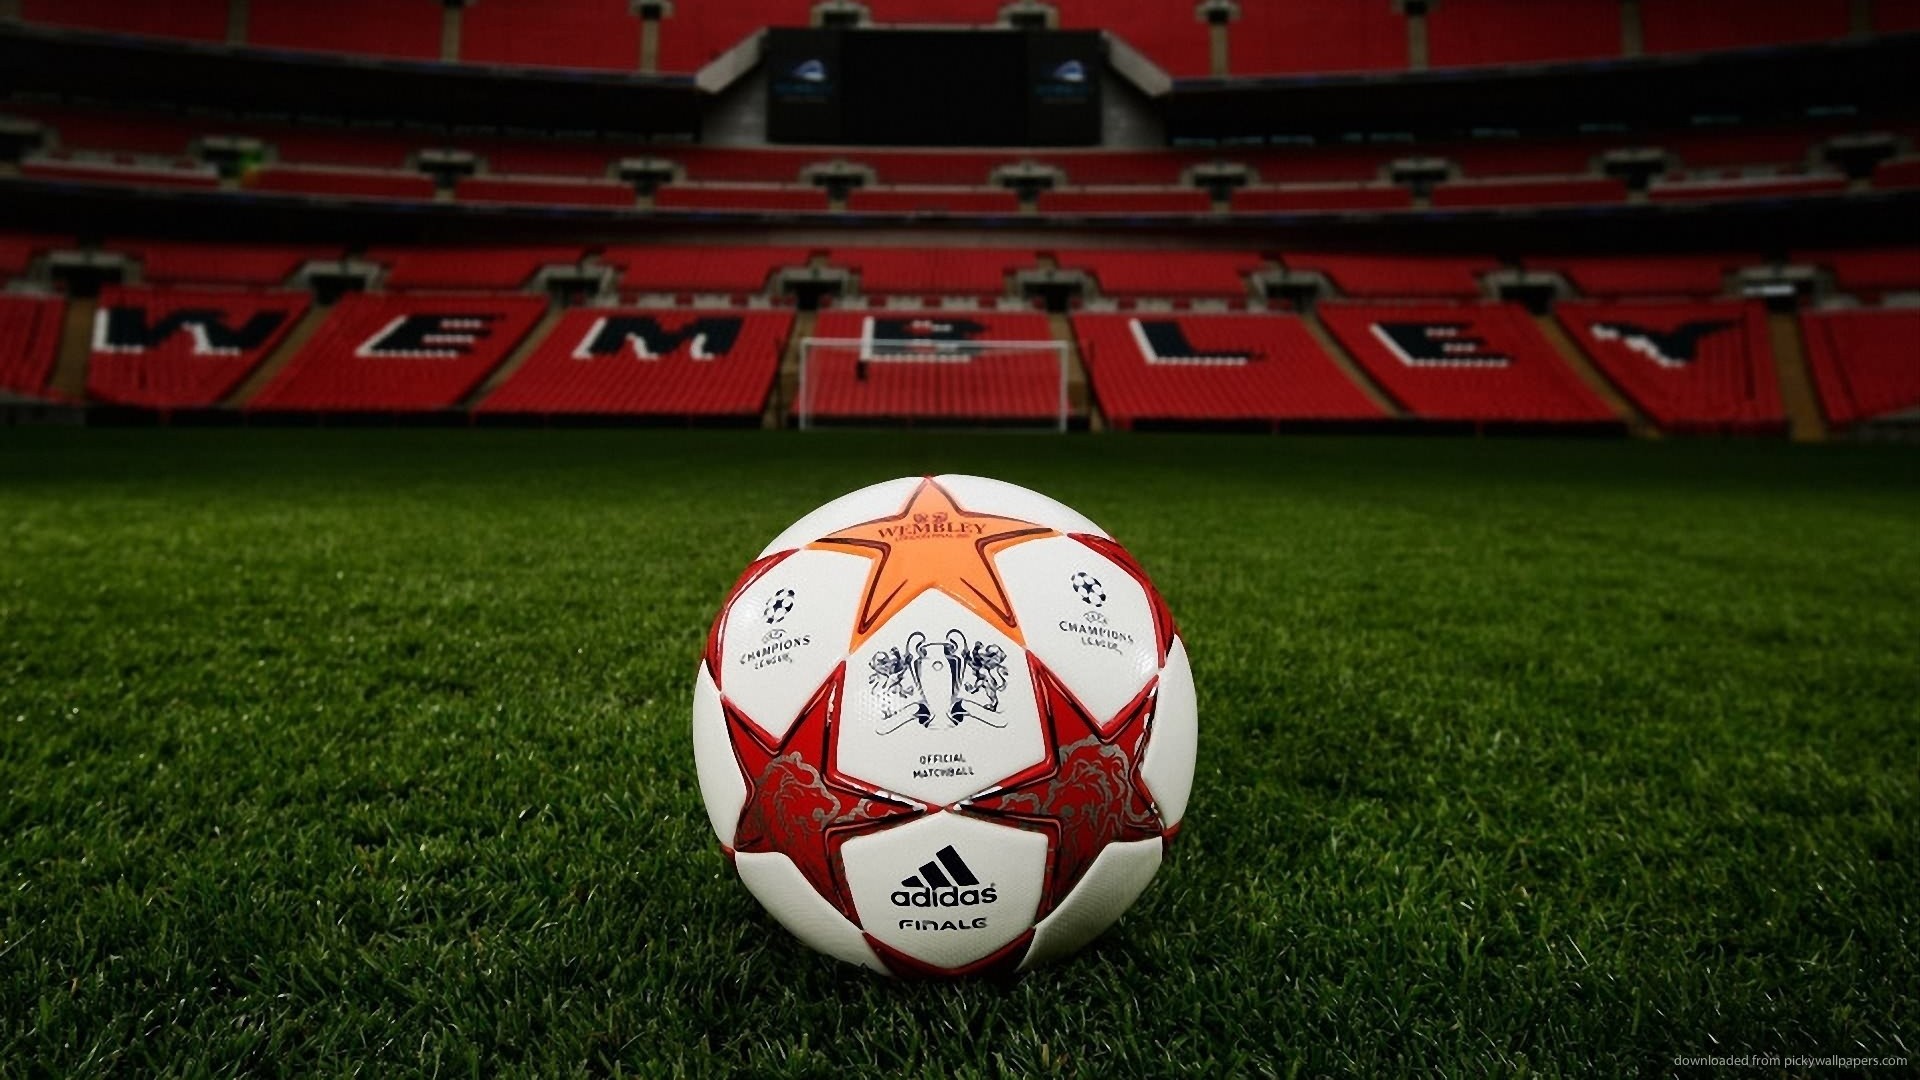 HD Soccer Football Ball 1080p Wallpaper Full Size - HiReWallpapers ...